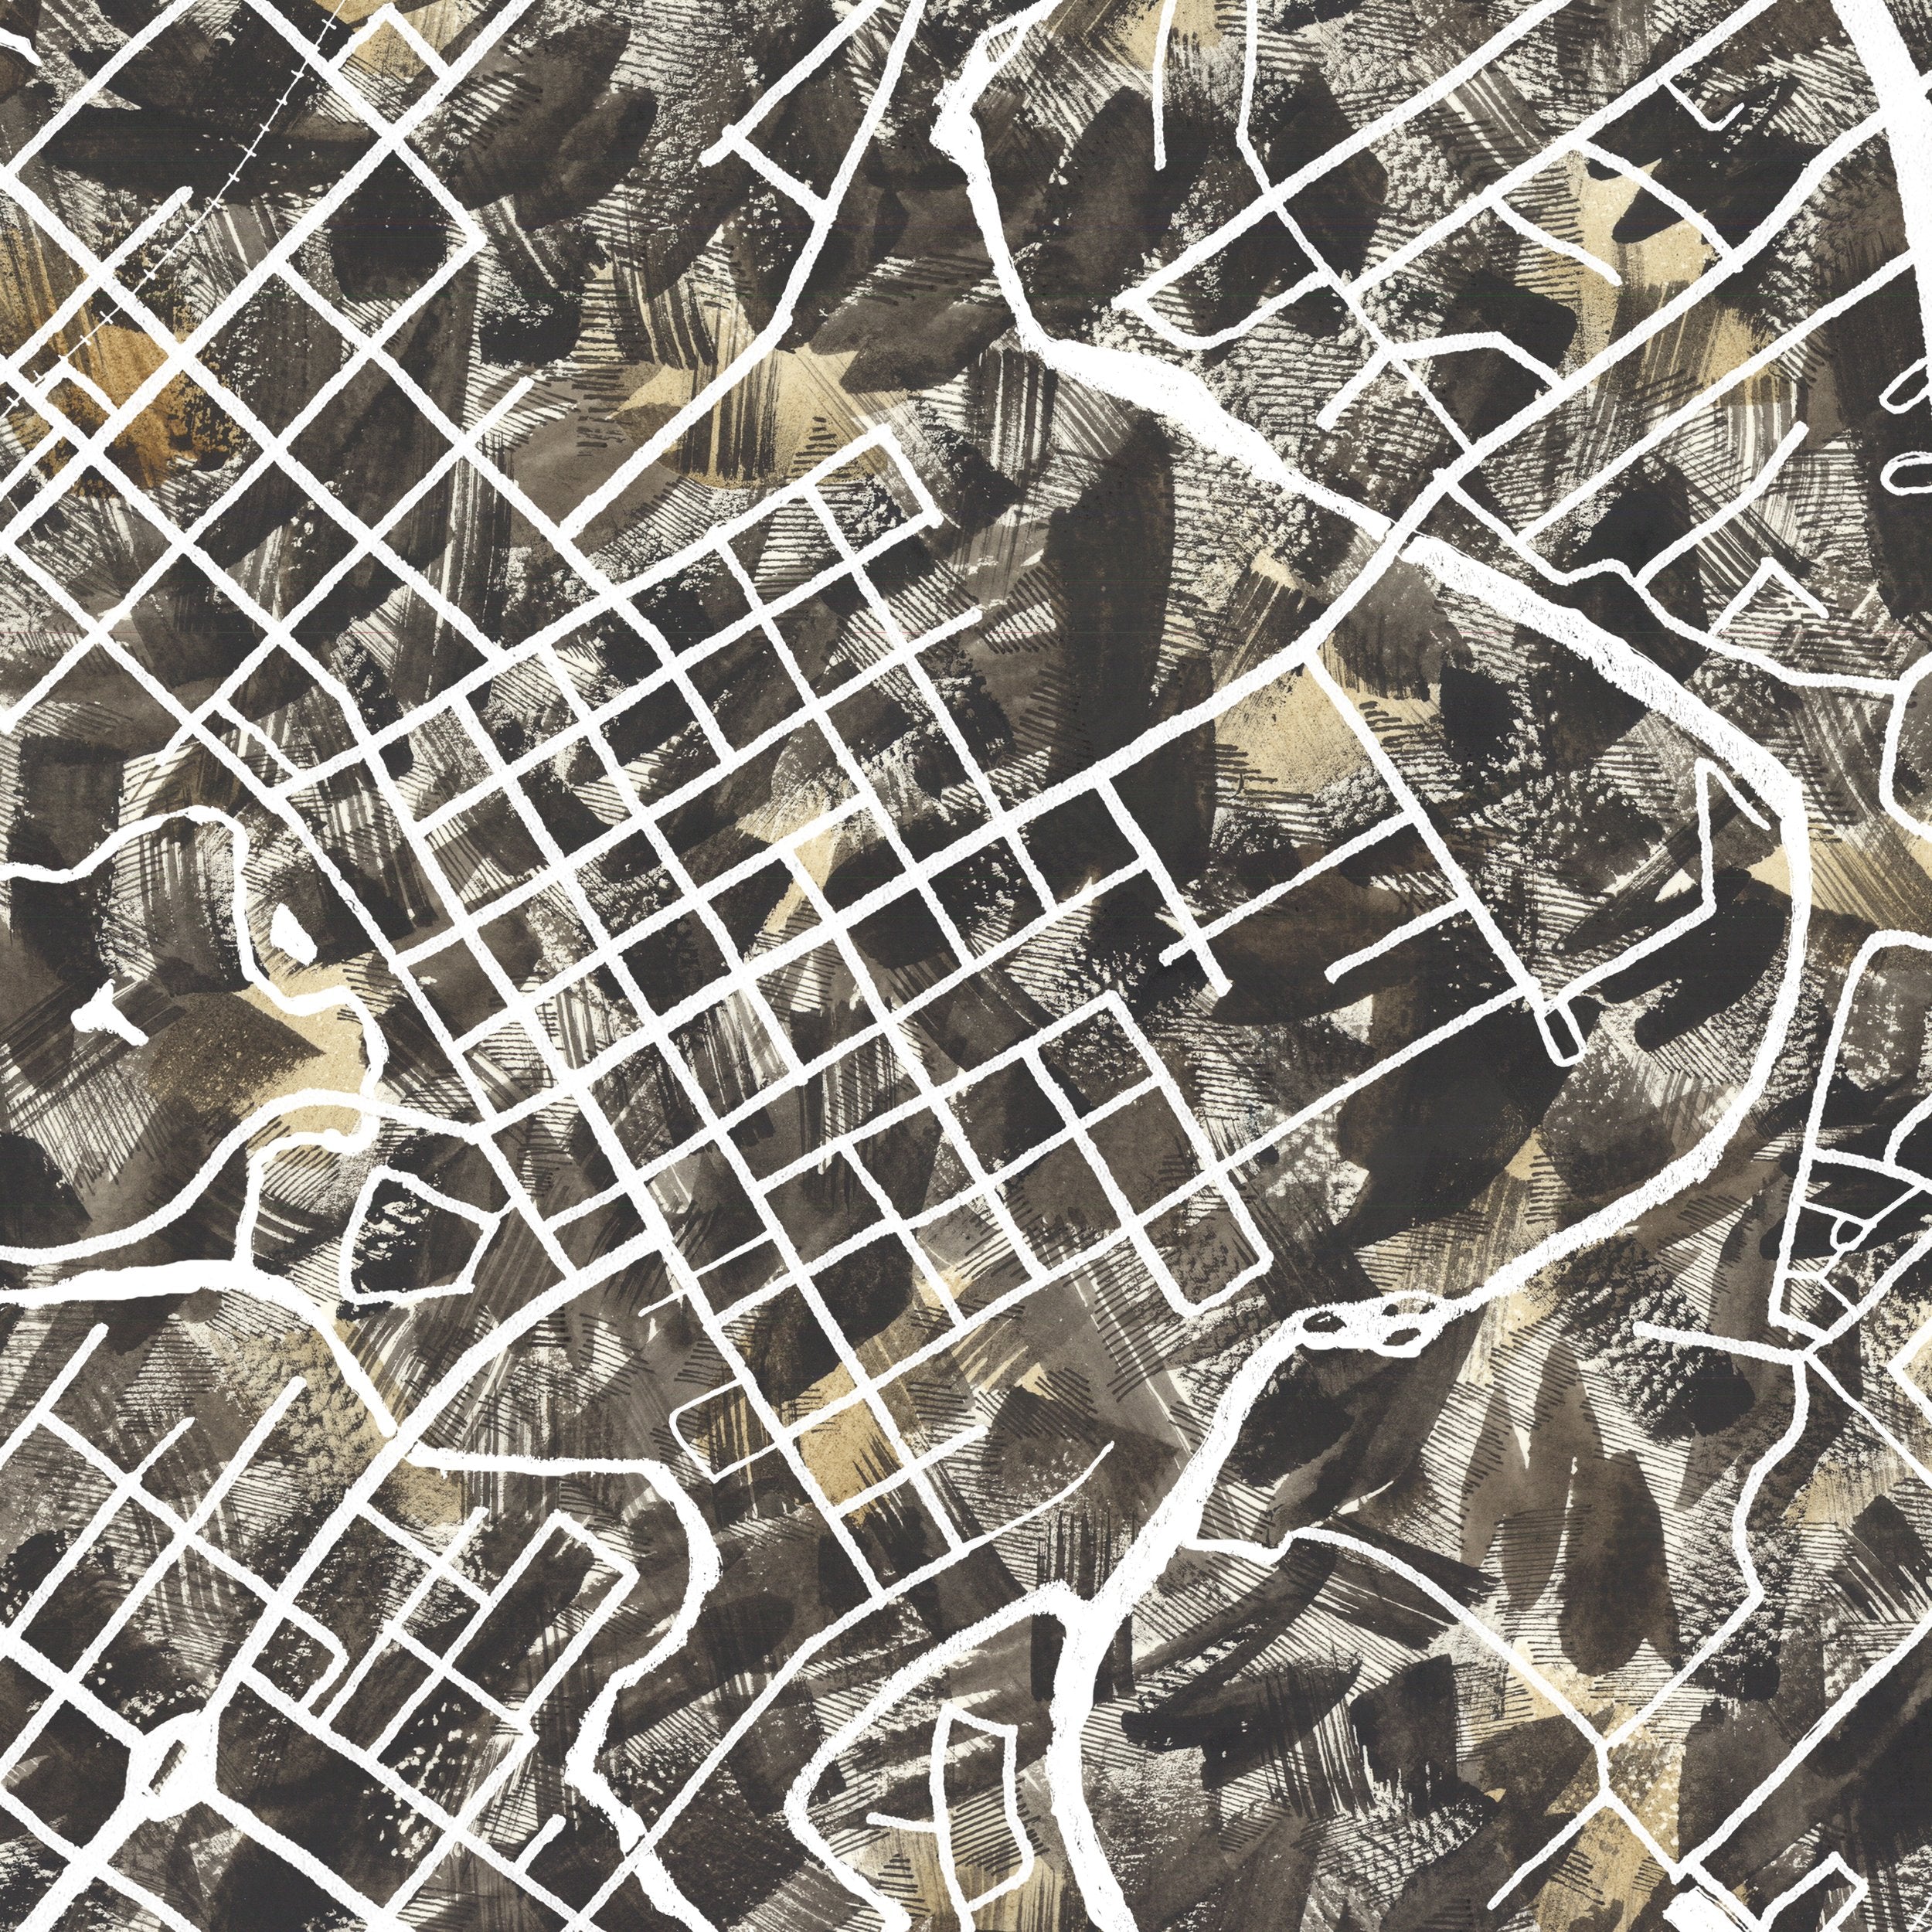 NEW BRAUNFELS Urban Fabrics City Map: PRINT